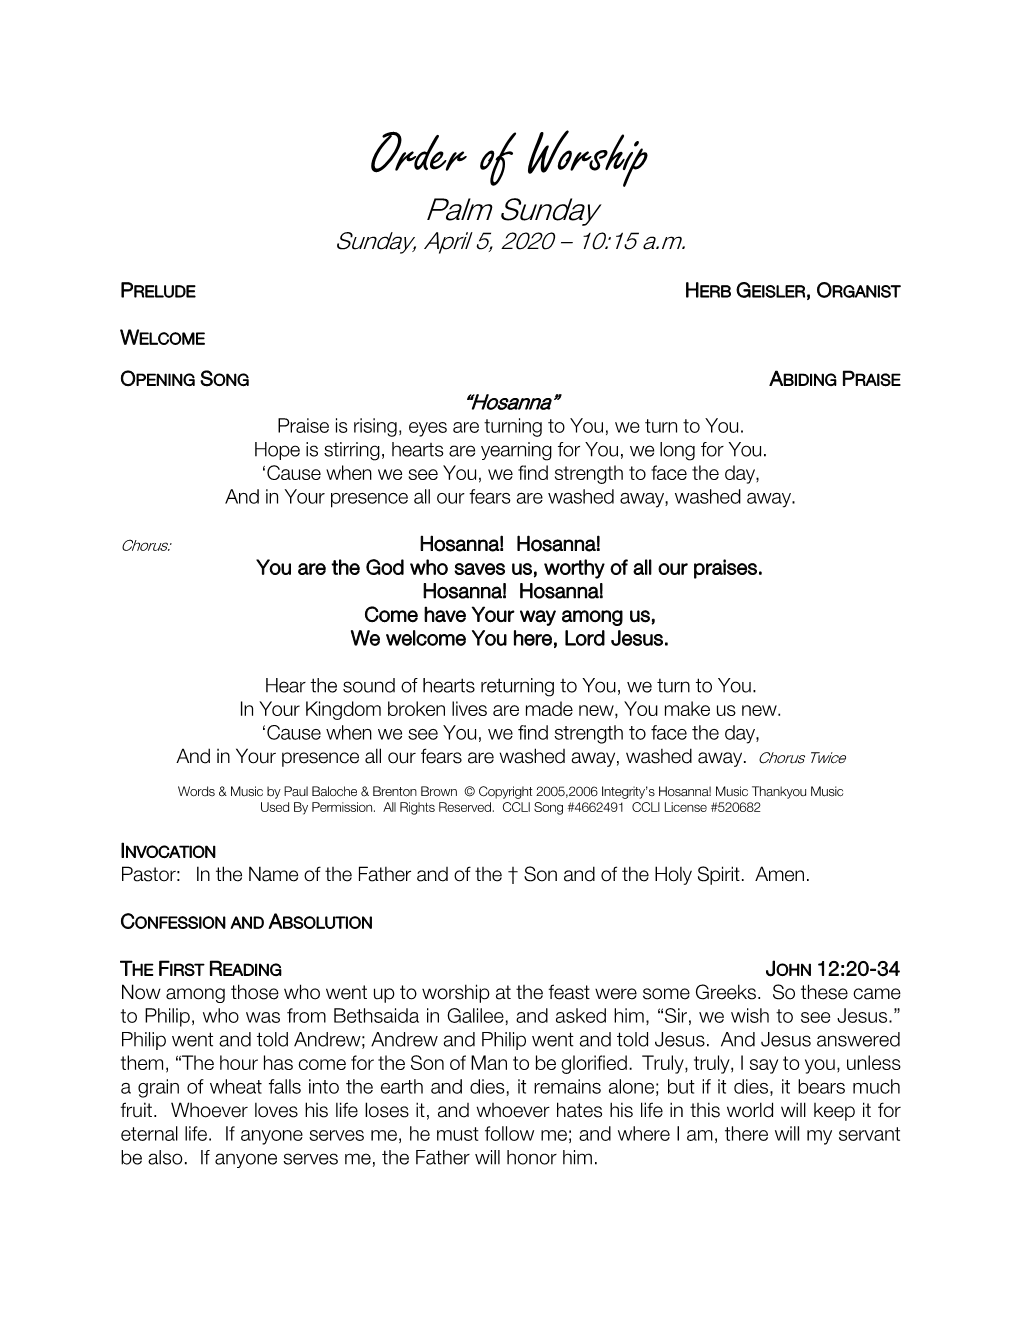 Order of Worship Palm Sunday Sunday, April 5, 2020 – 10:15 A.M